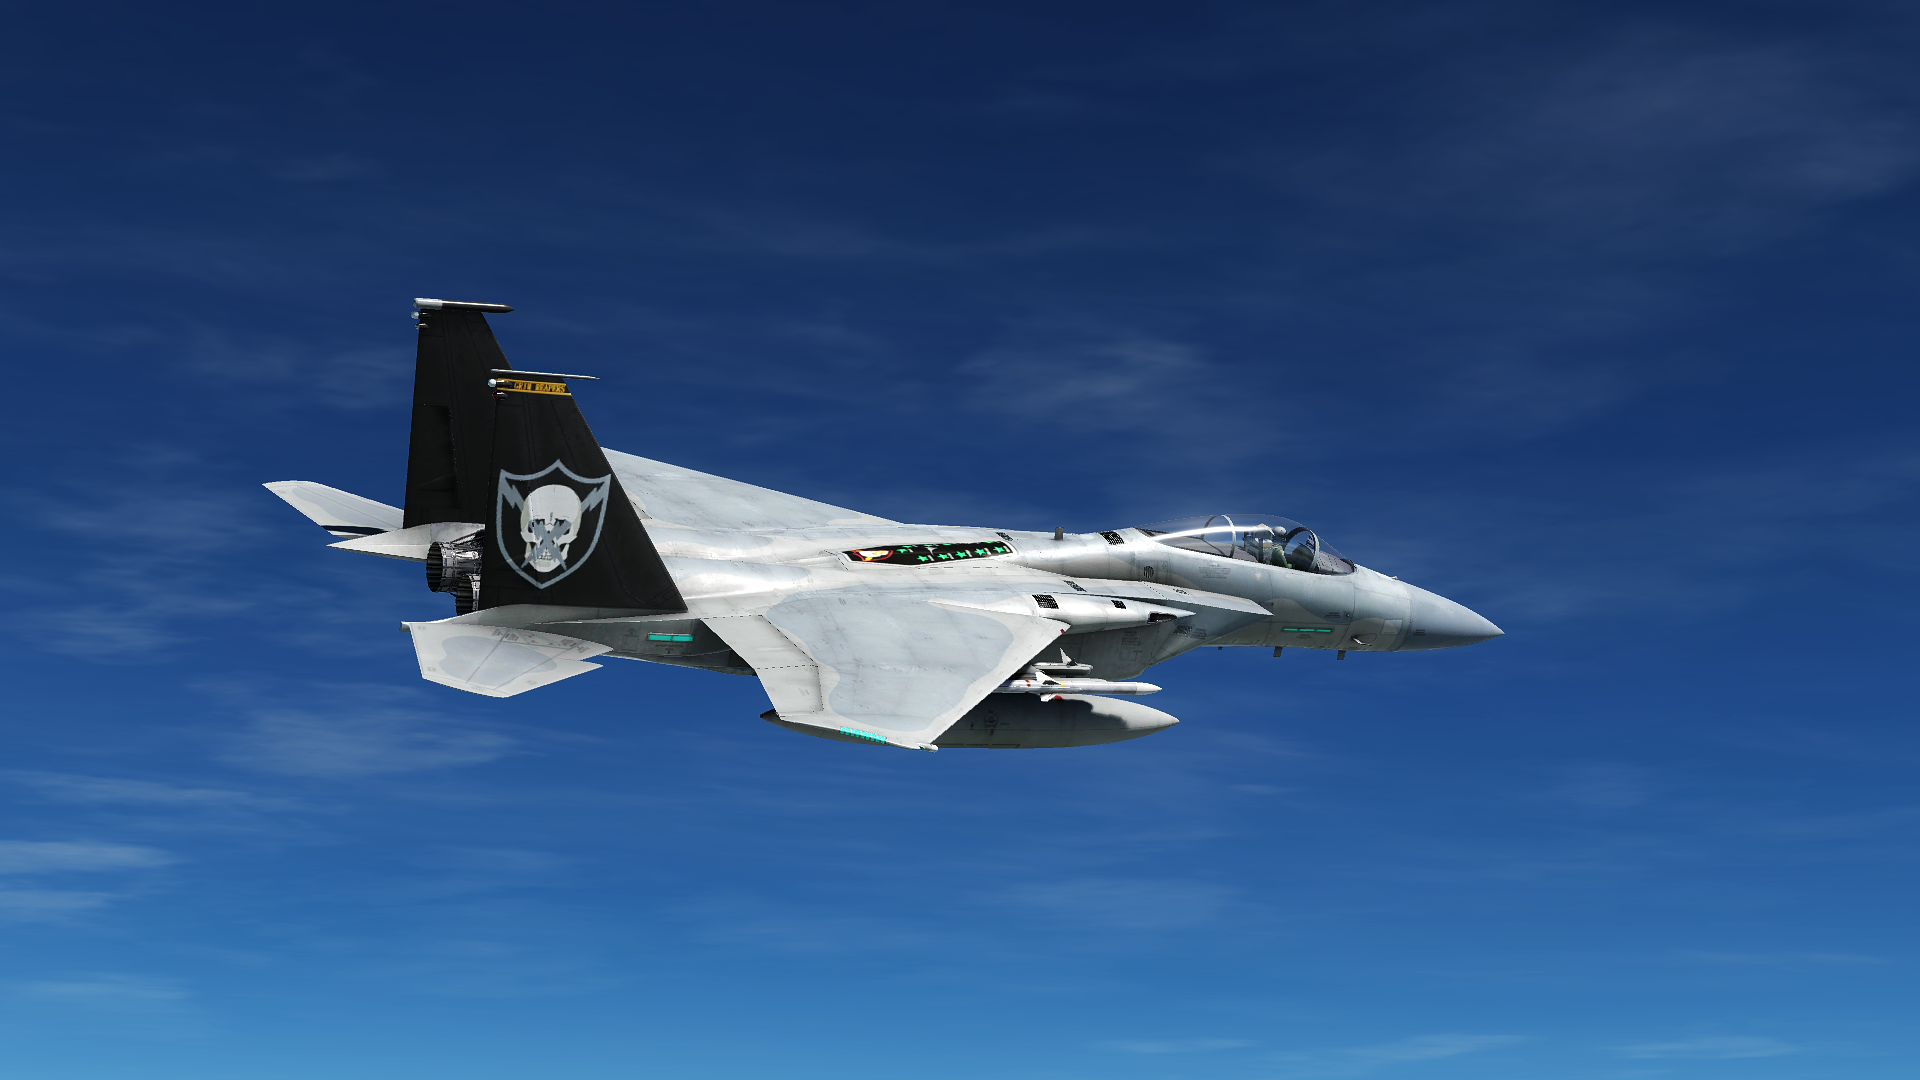 Updated: 493rd Lakenheath anniversary jet "Last eagles in europe" F-15C